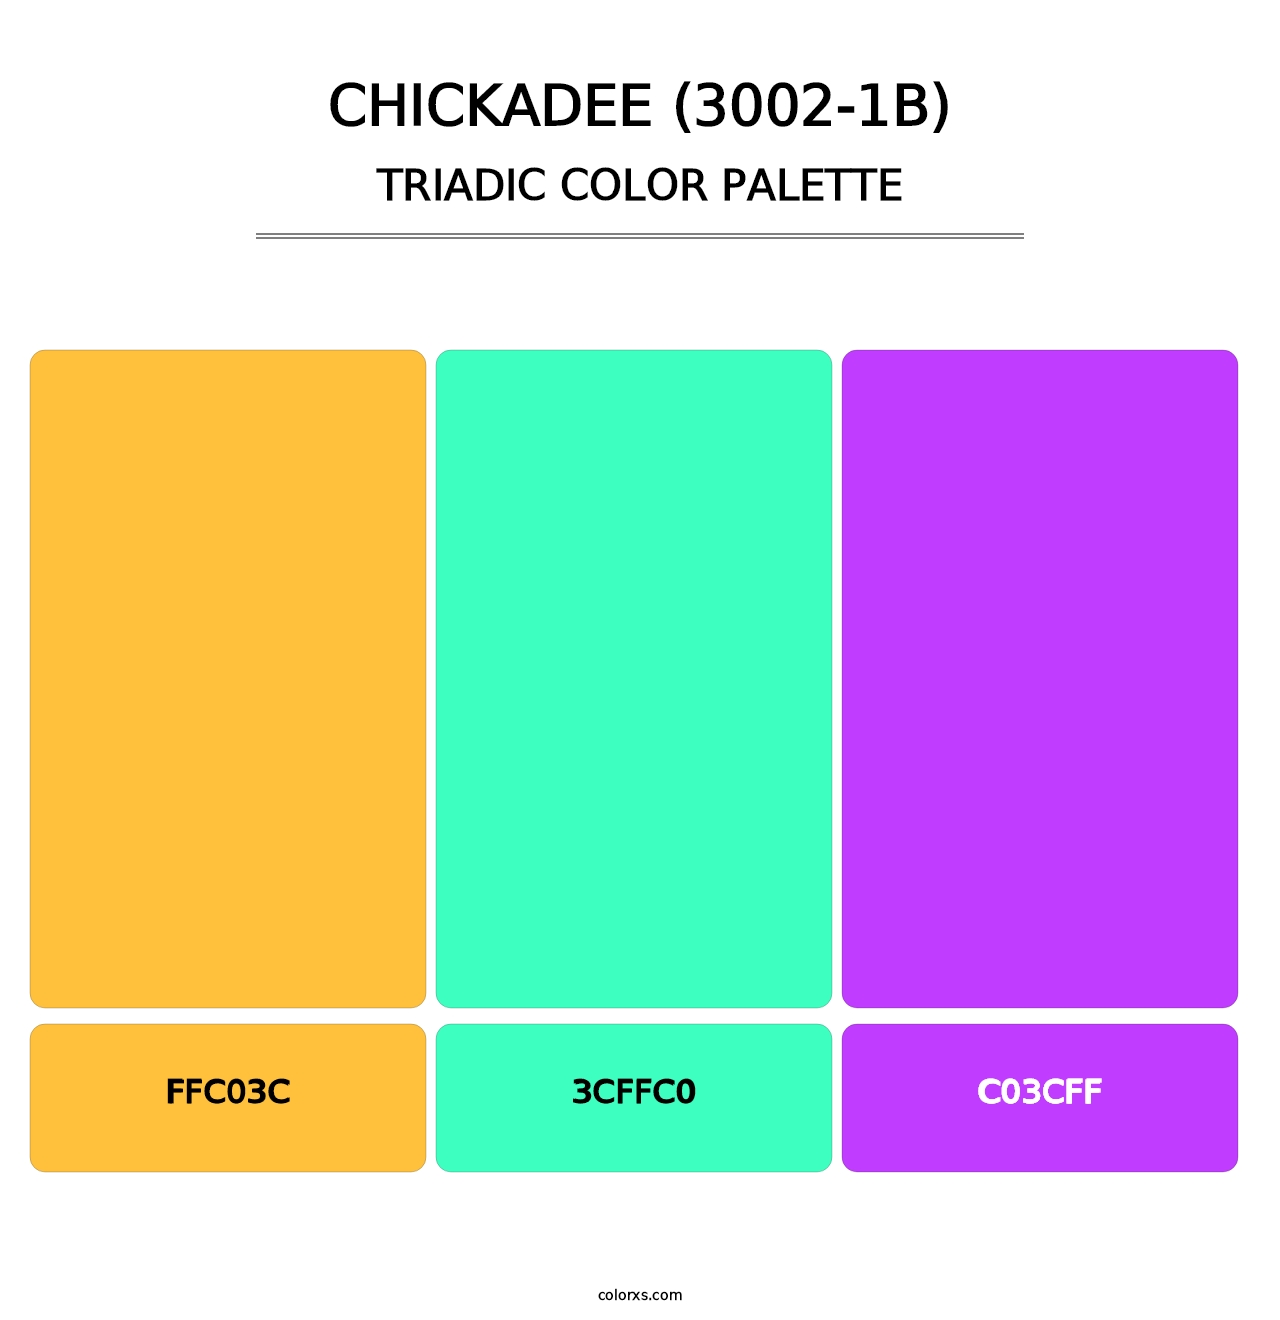 Chickadee (3002-1B) - Triadic Color Palette